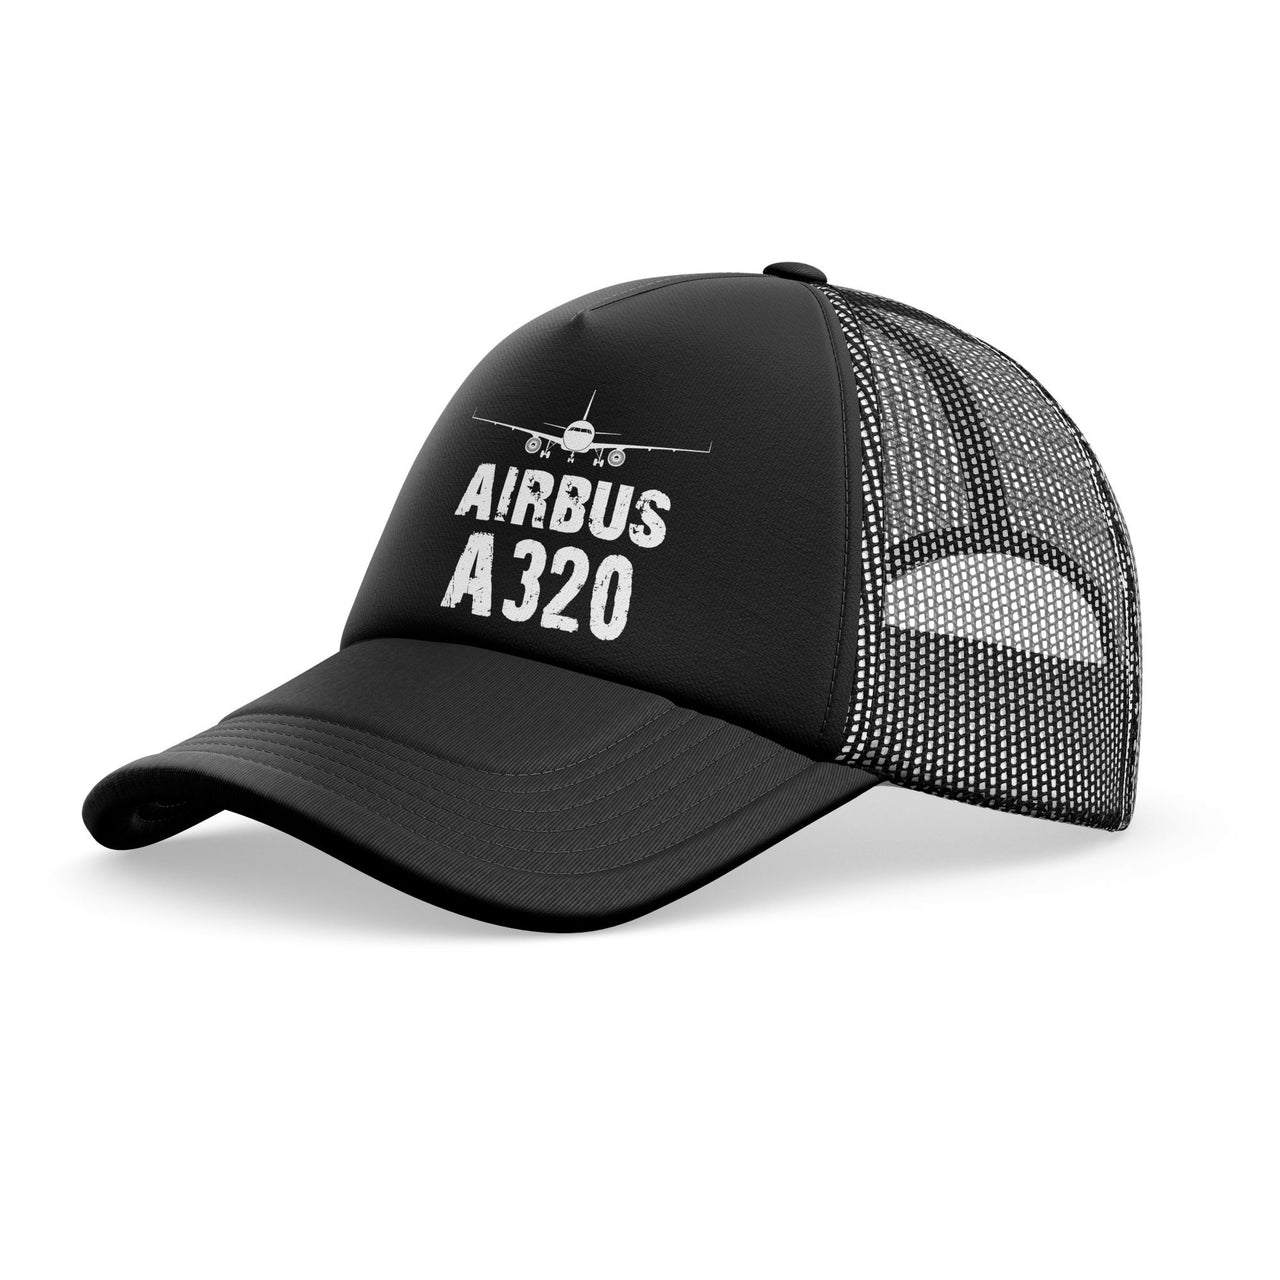 Airbus A320 & Plane Designed Trucker Caps & Hats